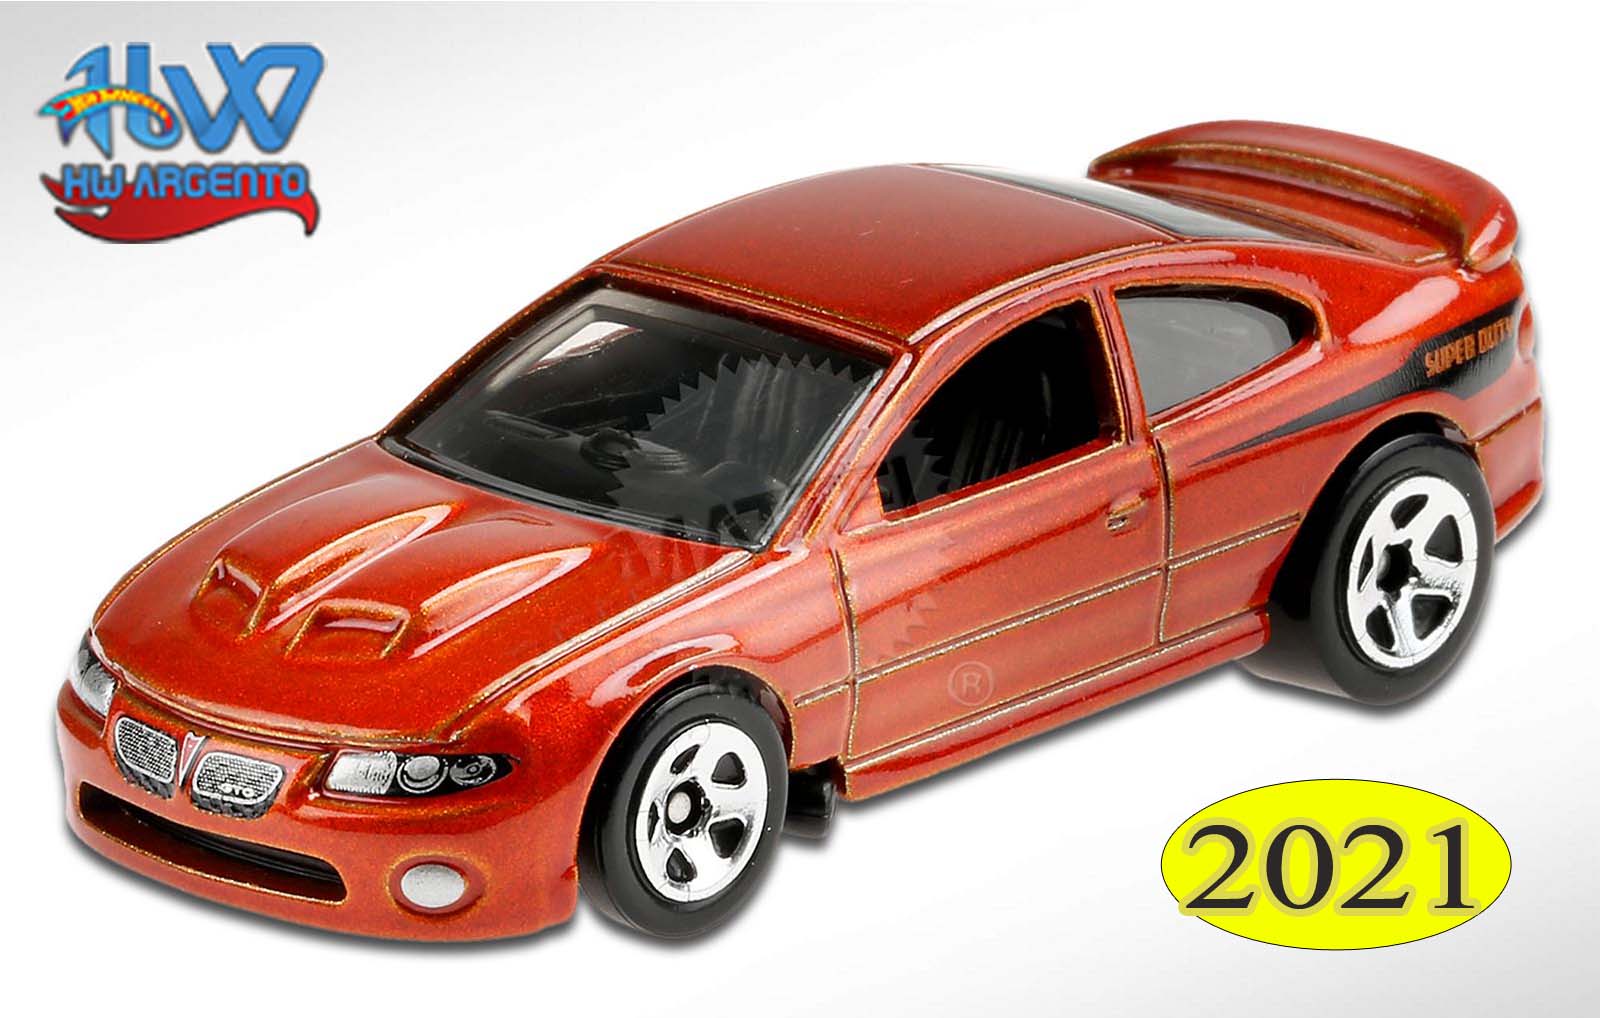 06 Pontiac GTO – 2021